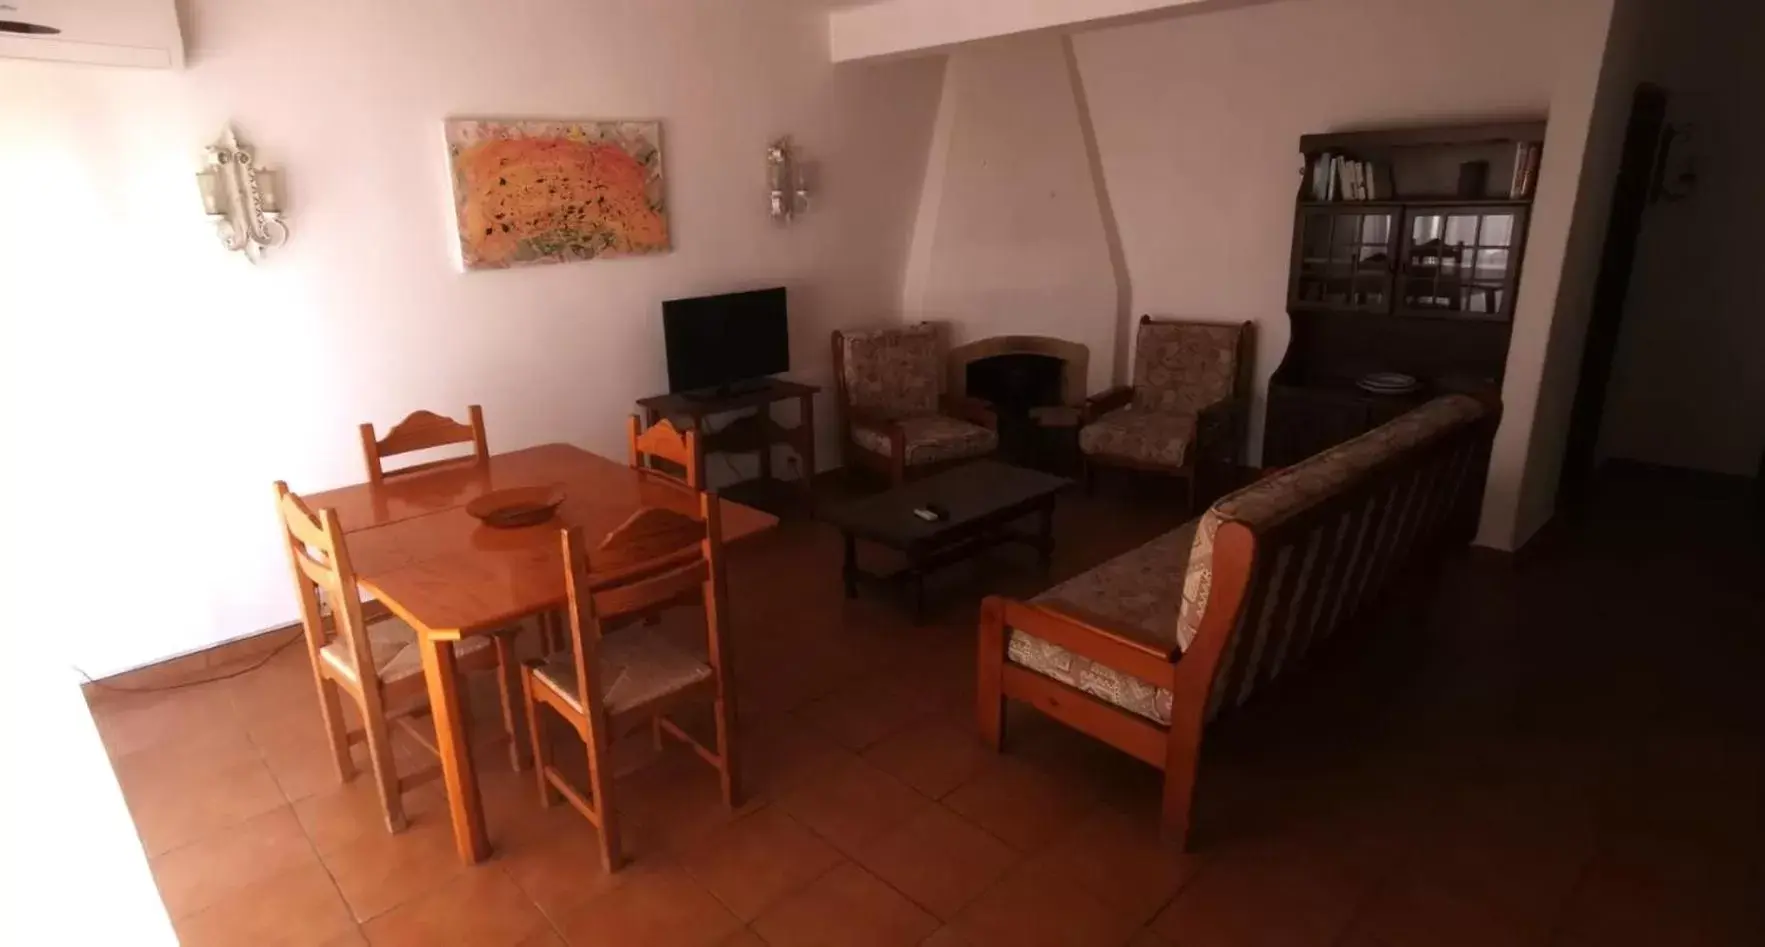 TV and multimedia, Seating Area in Vilas Marrocha